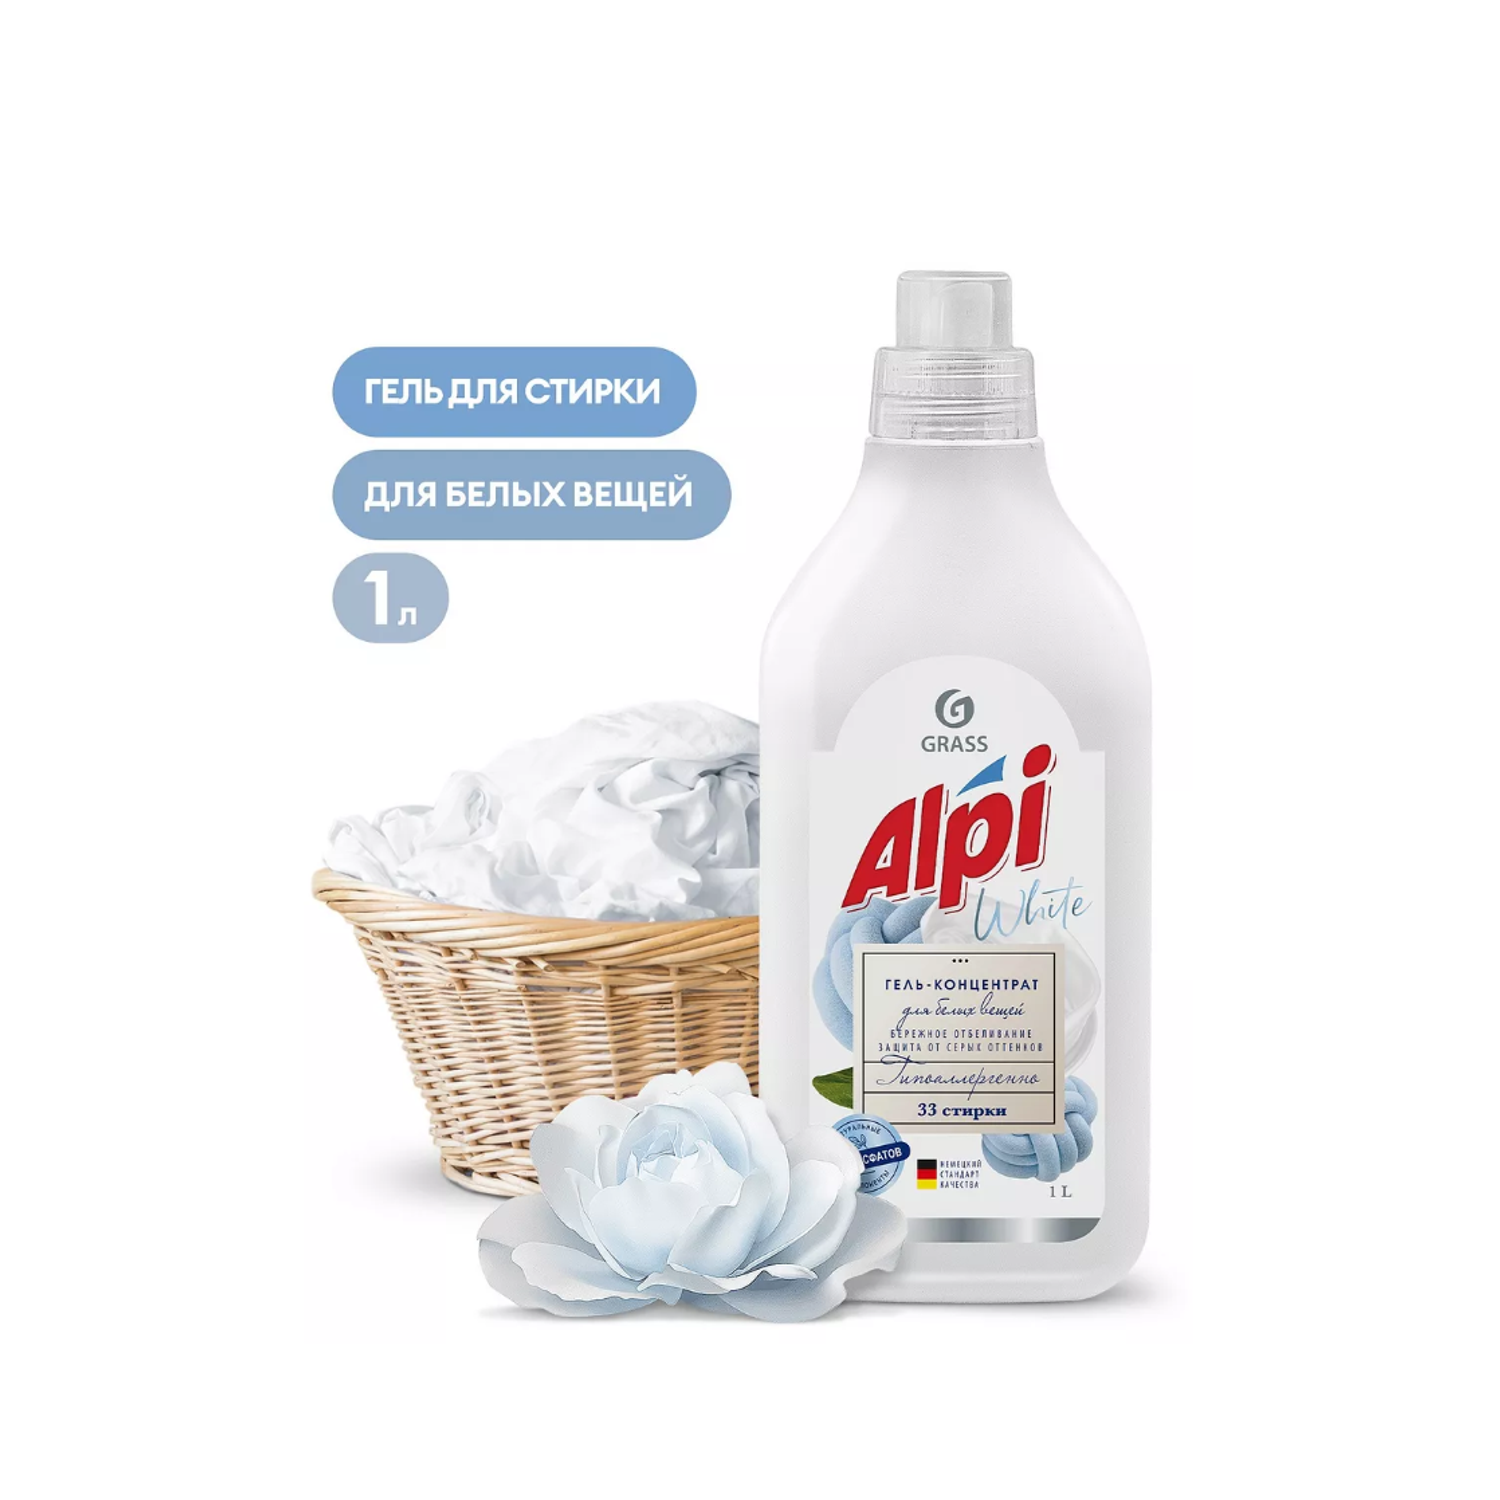 Жидкое средство для стирки GraSS Alpi white gel - фото 1